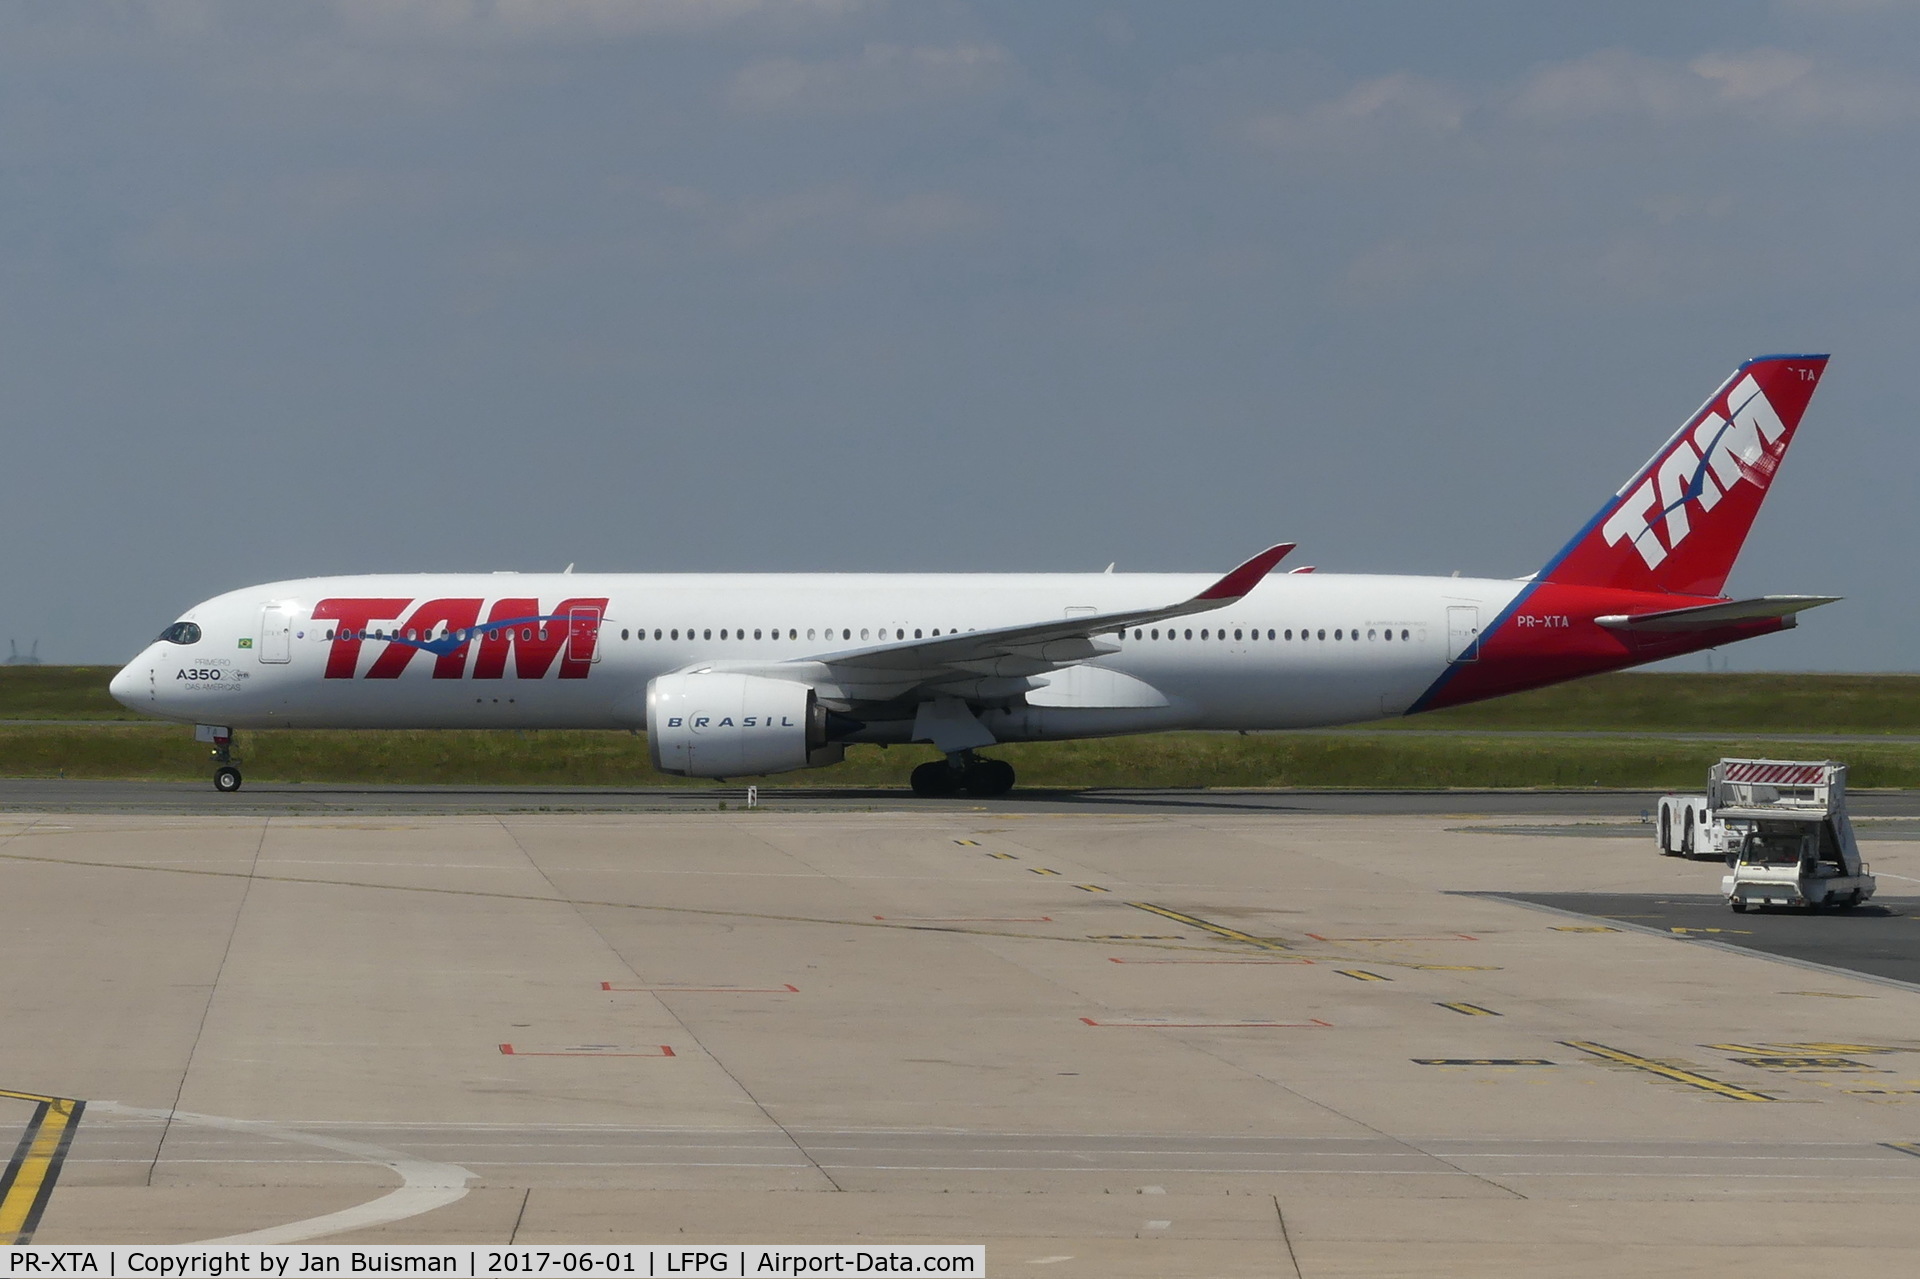 PR-XTA, 2015 Airbus A350-941 C/N 024, TAM, Primero A350 das Americas